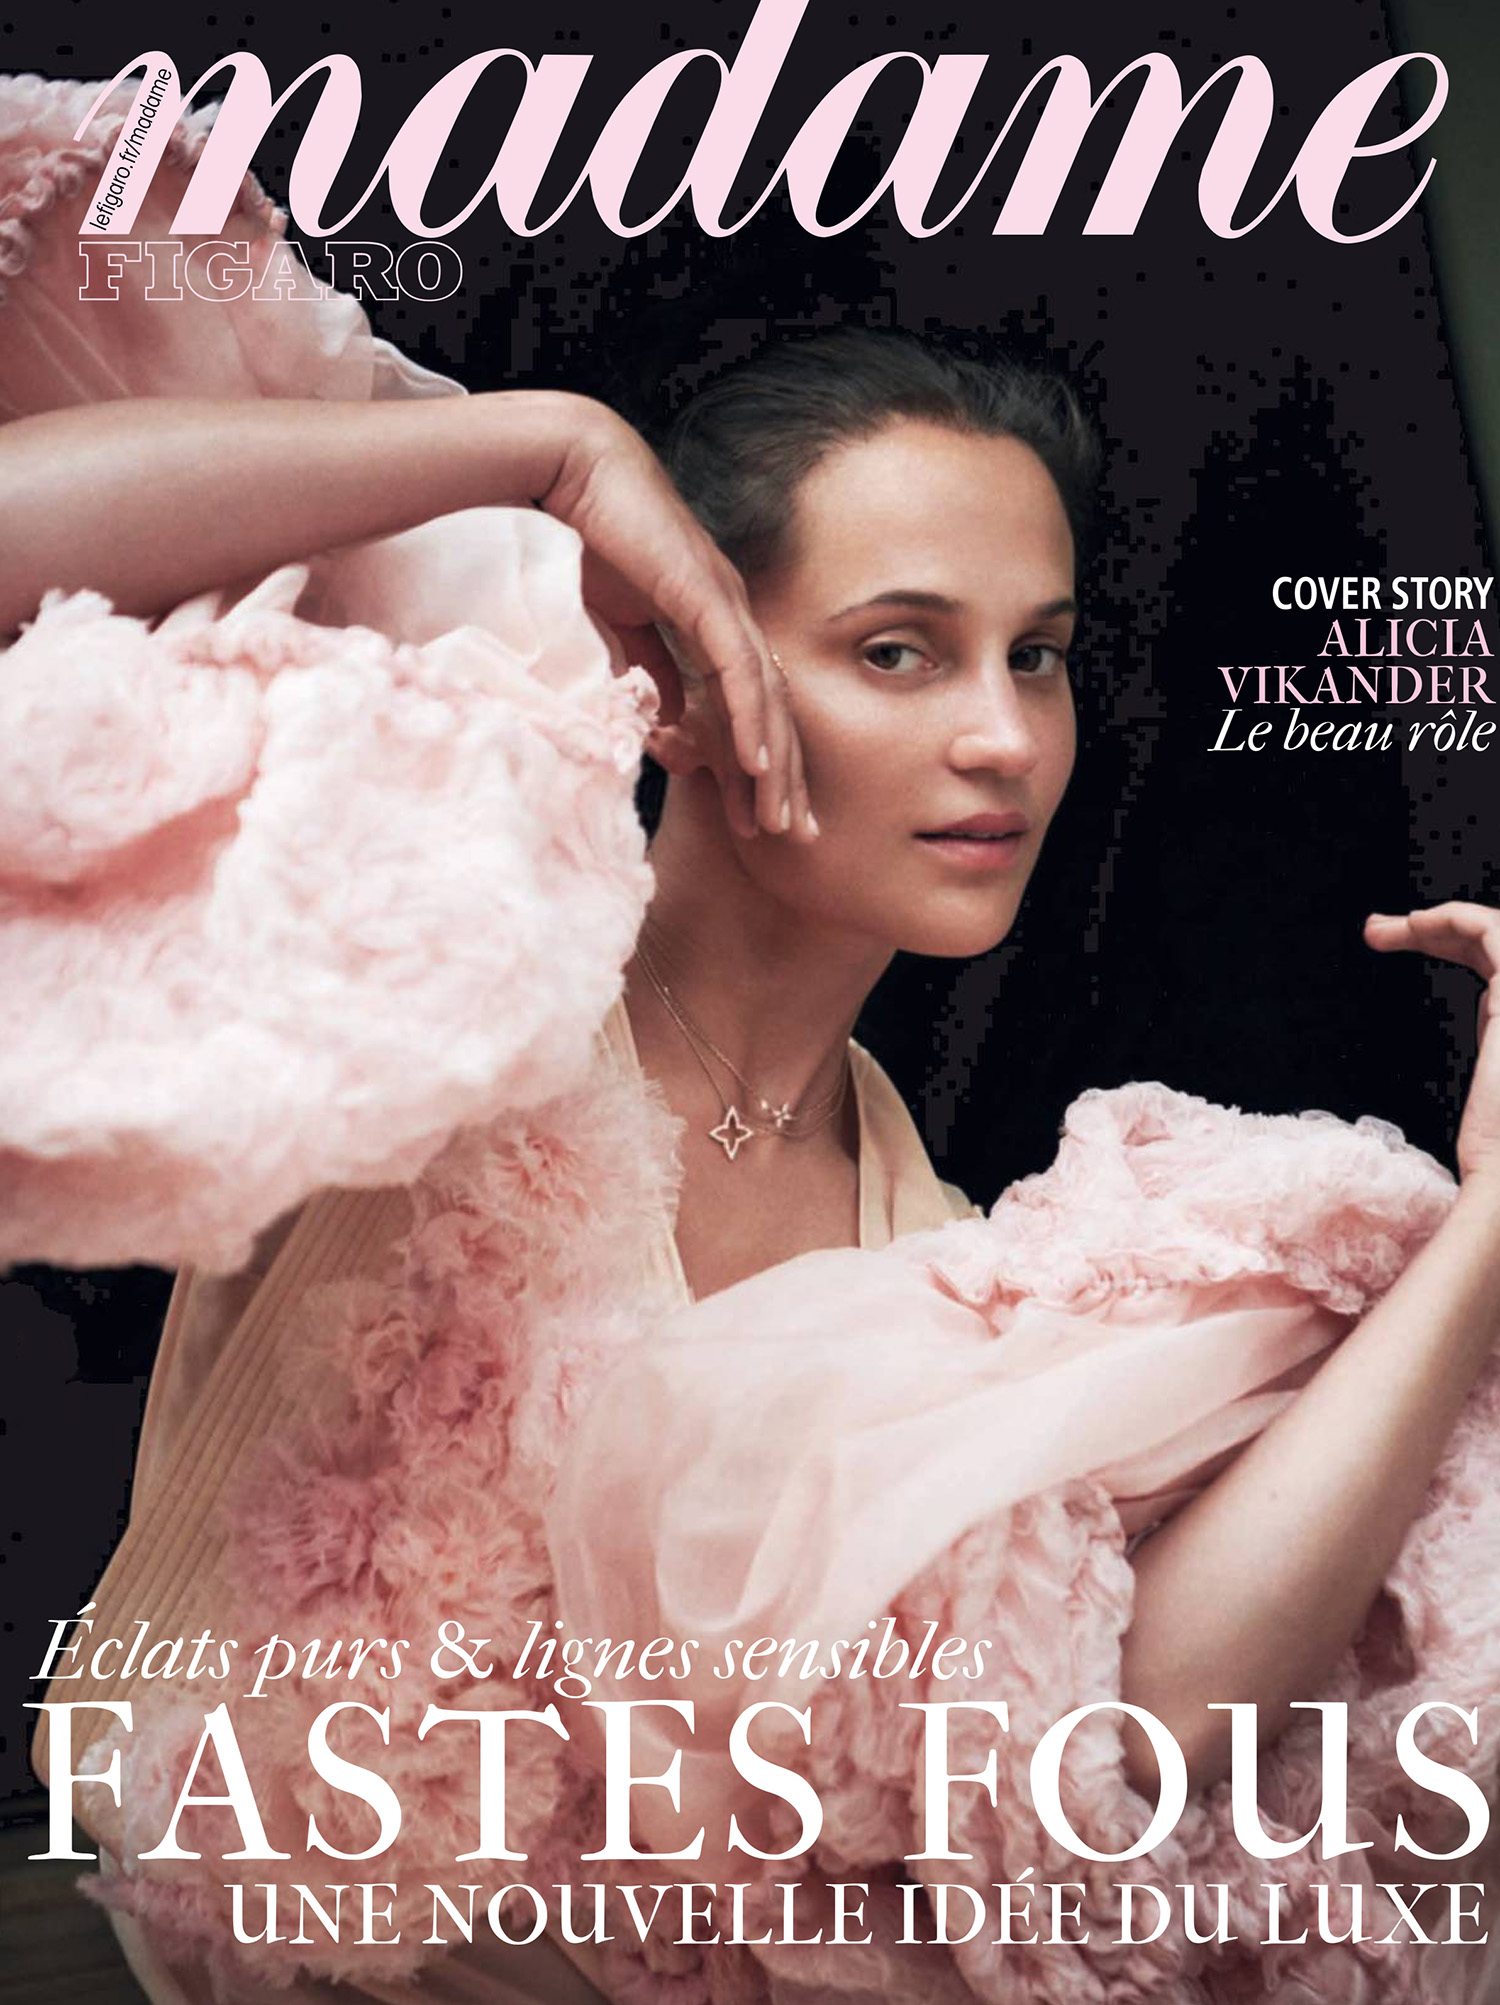 Louis Vuitton Magazines